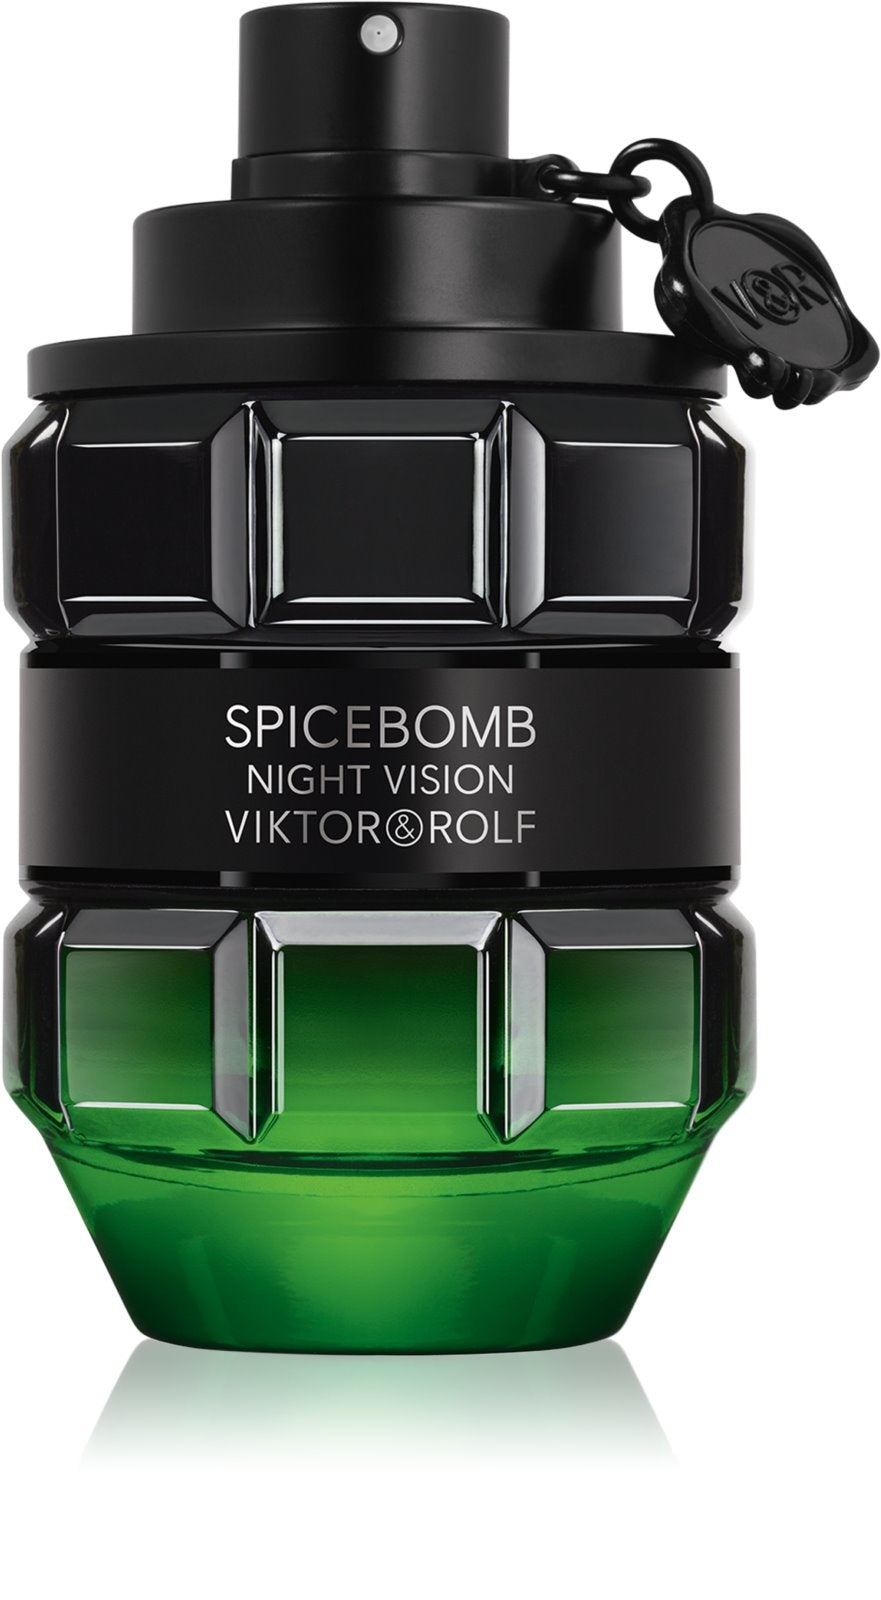 Spicebomb Night Vision Eau de Toilette